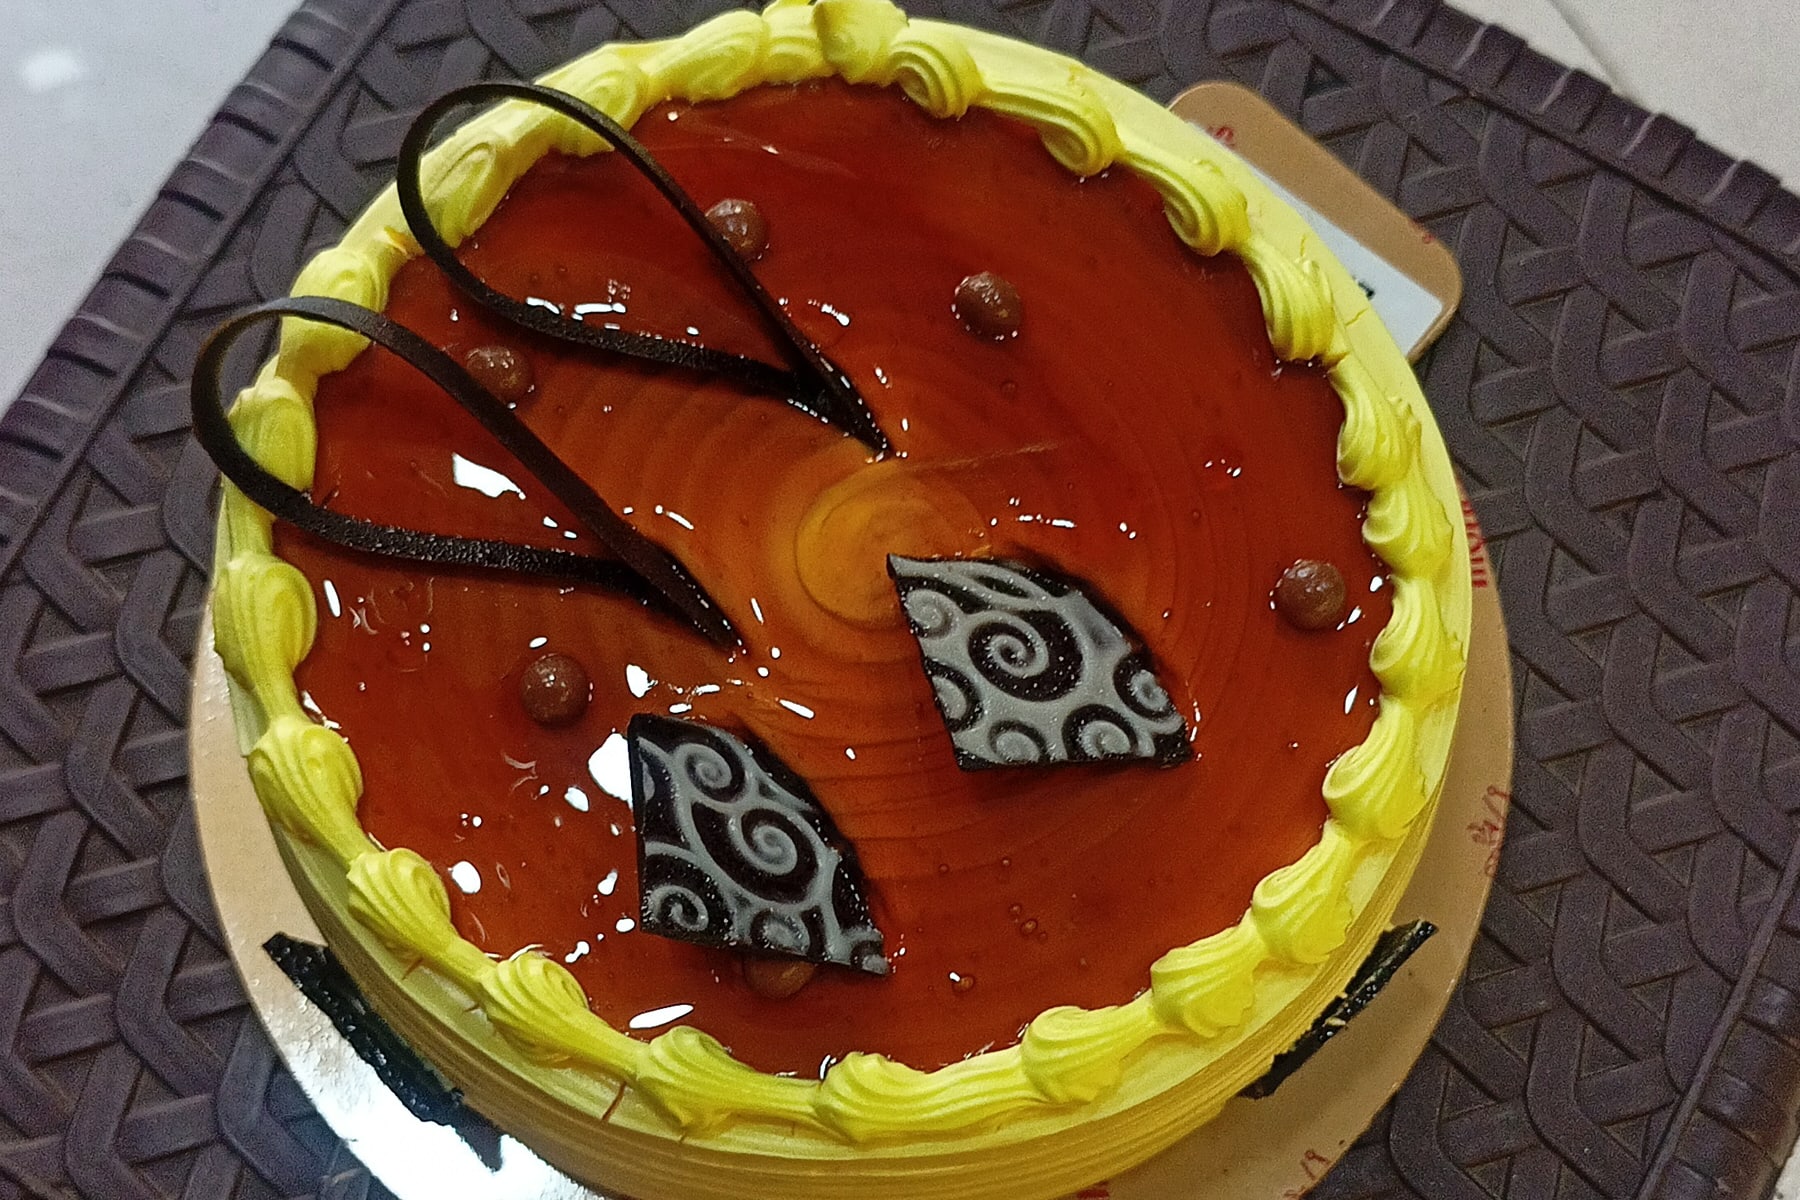 Ninety Degrees The Cake Studio in Airoli,Mumbai - Order Food Online - Best  Cake Shops in Mumbai - Justdial